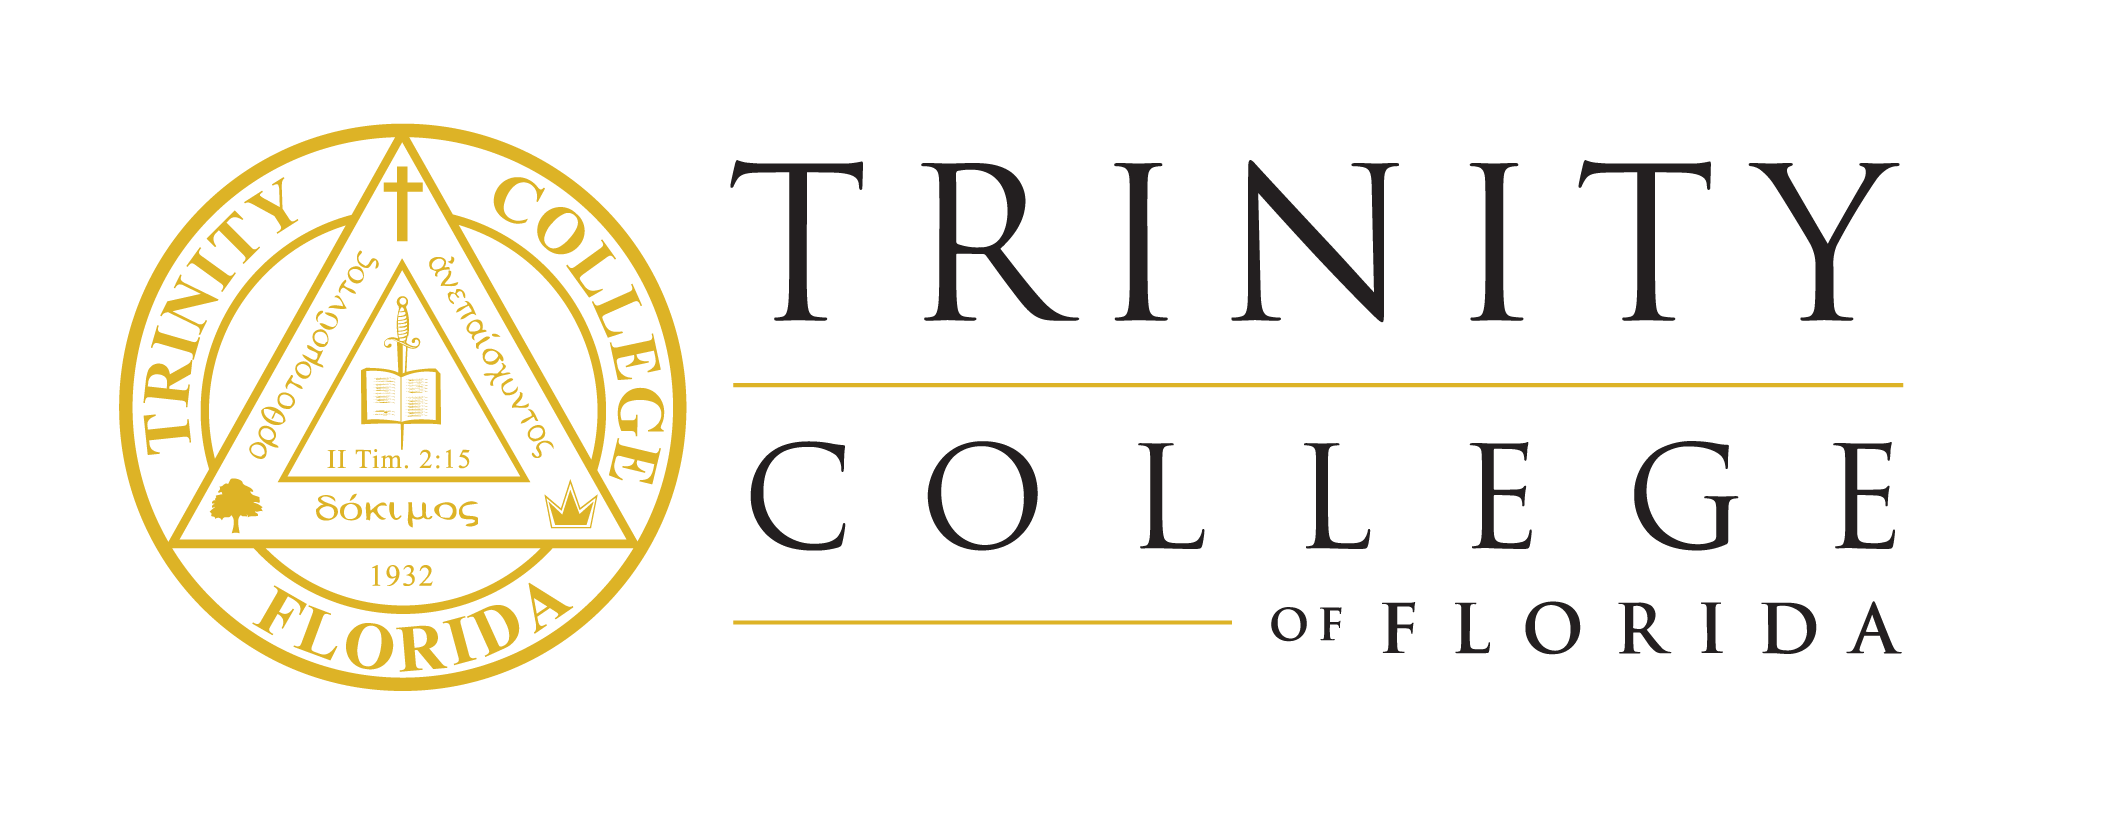 trinity college